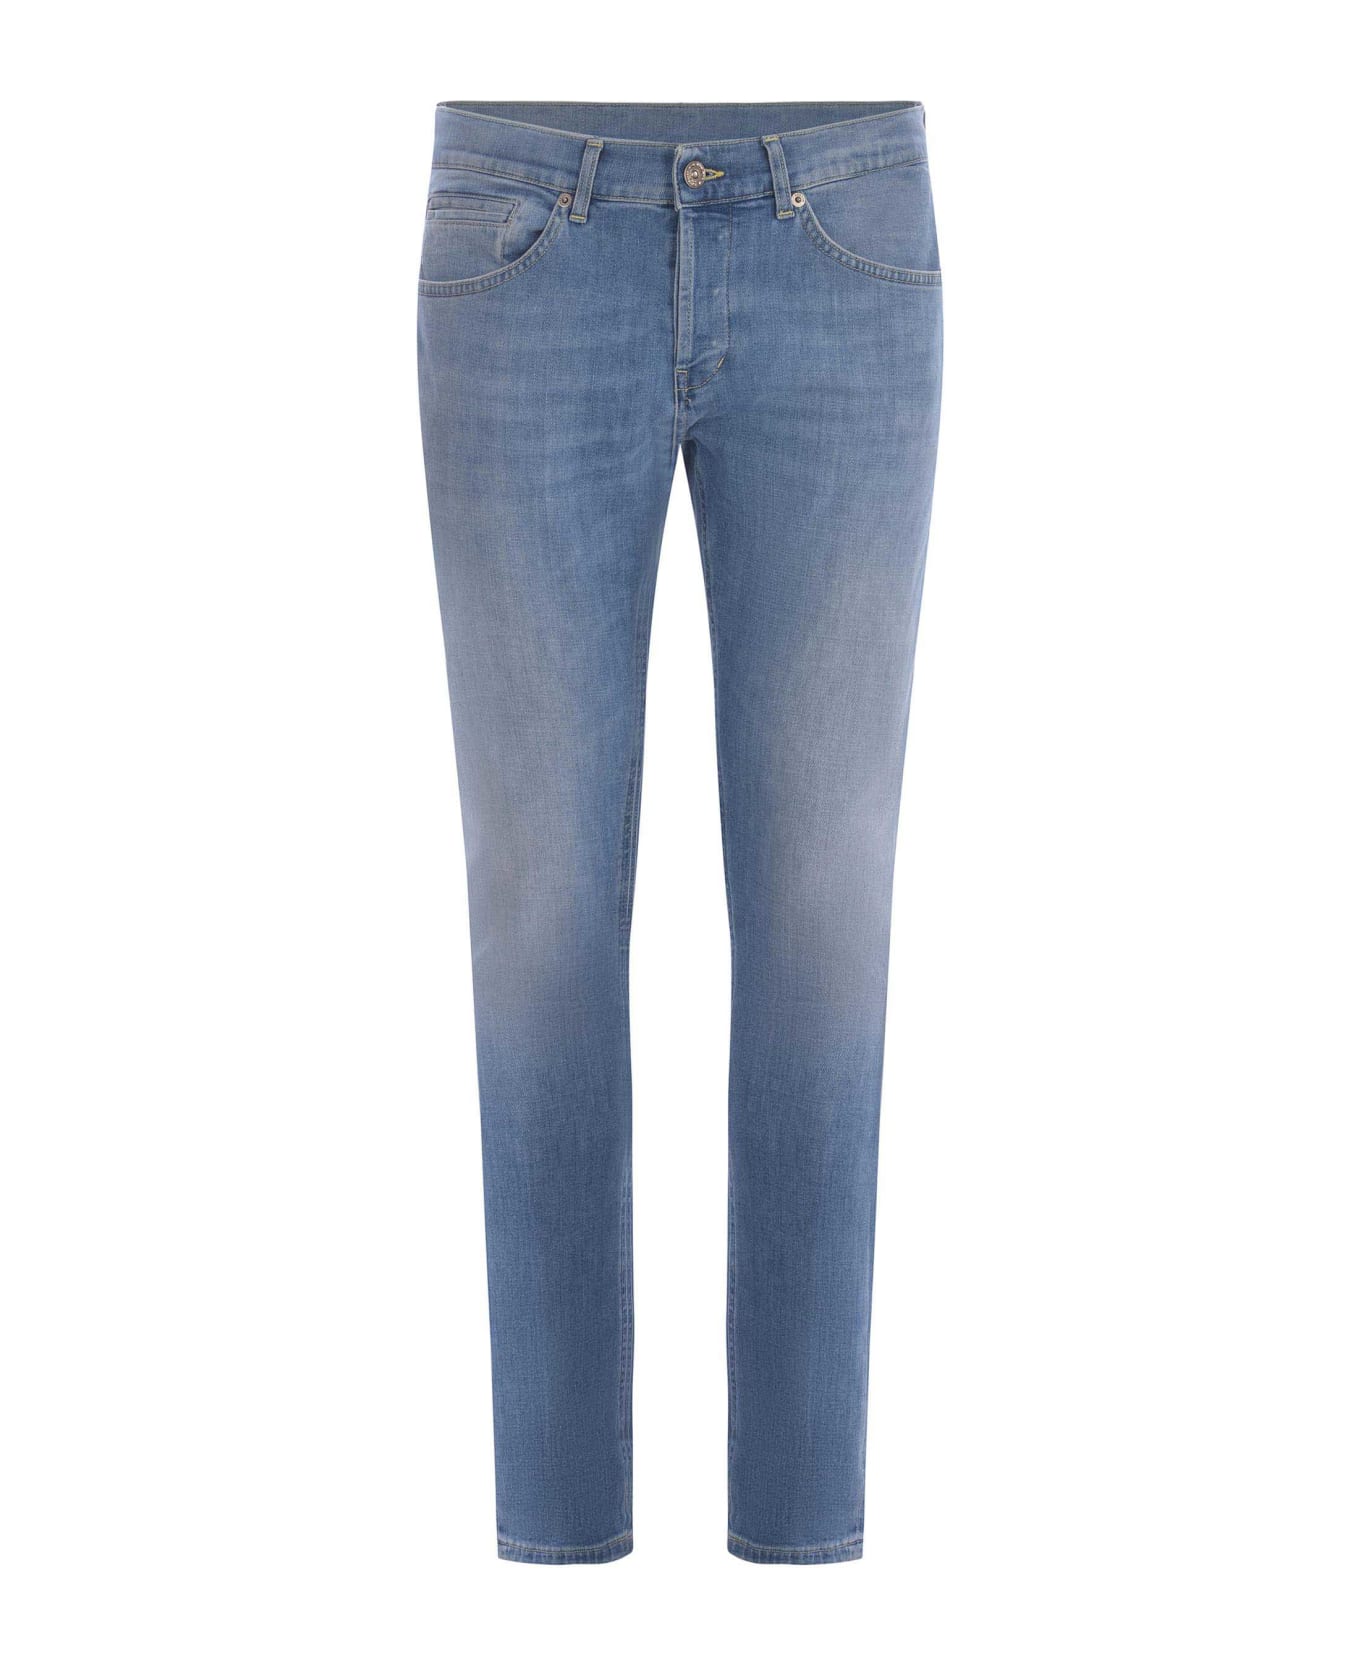 Dondup Jeans Dondup "george" Made Of Stretch Denim - Denim azzurro chiaro デニム